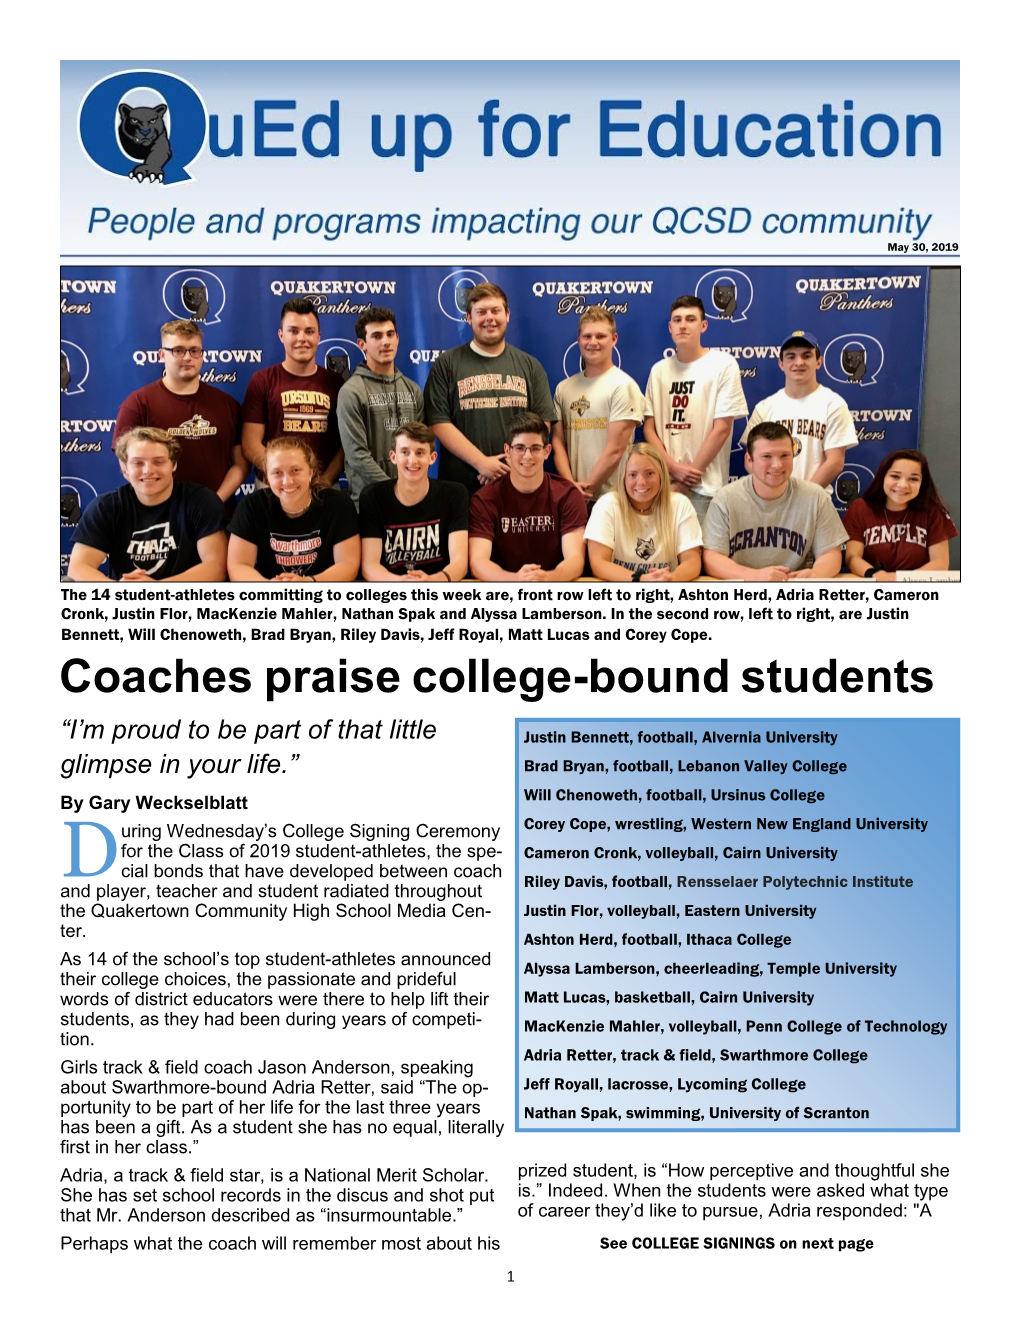 Coaches Praise College-Bound Students